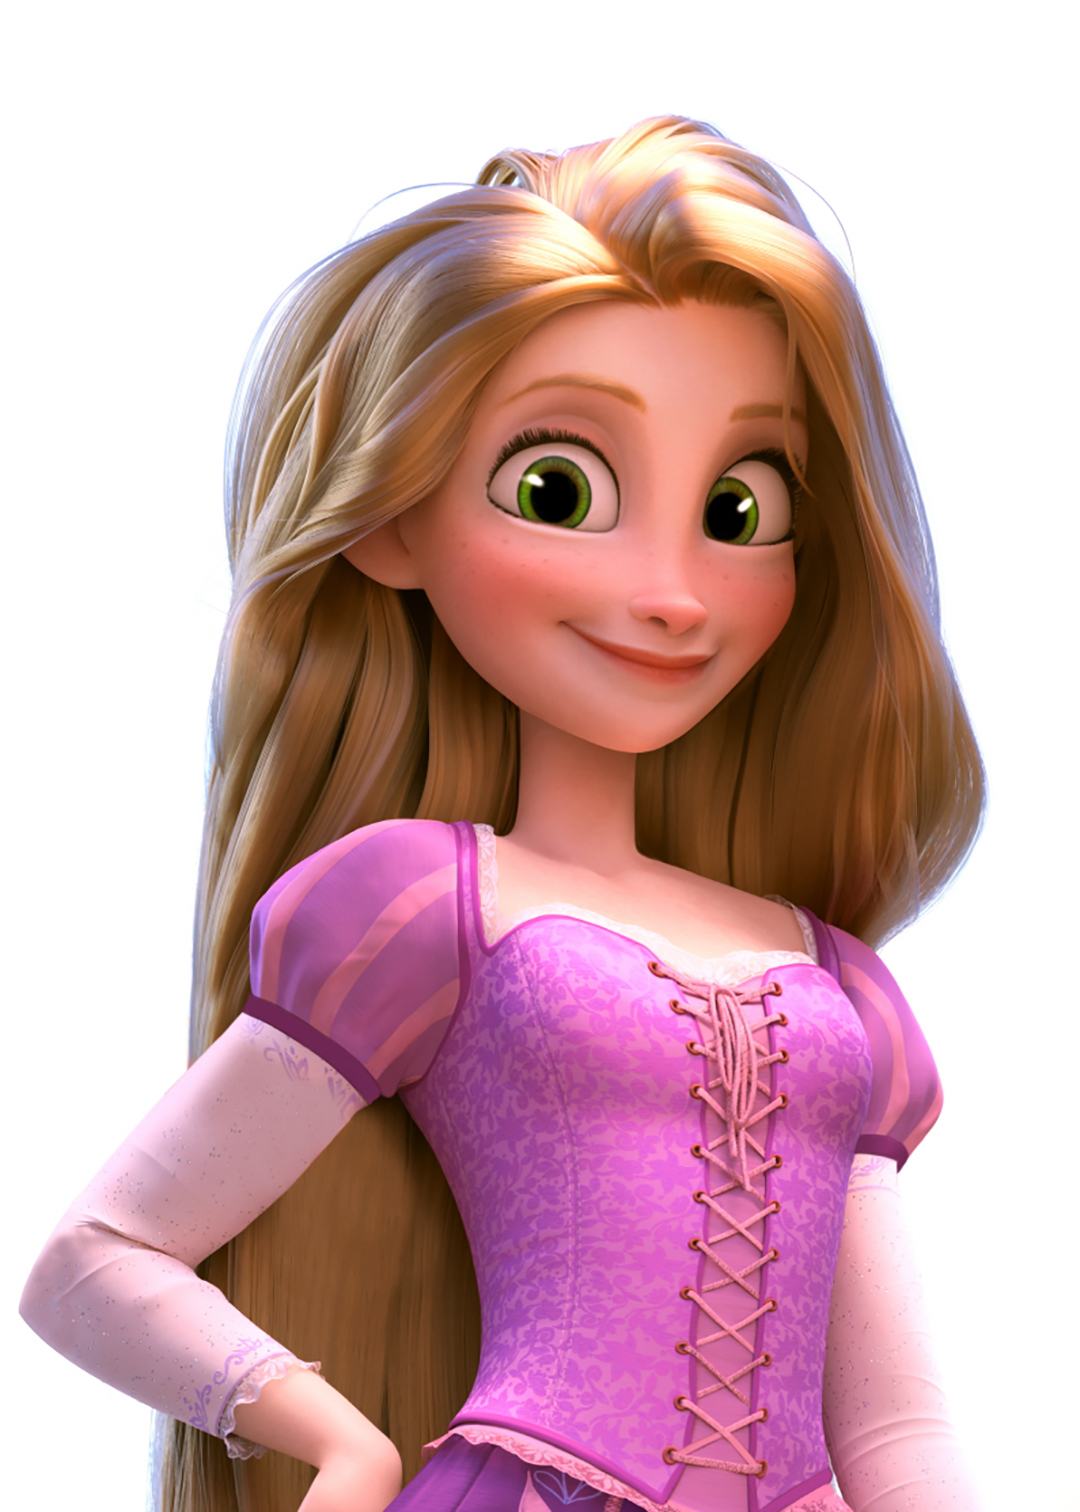 Queen Rapunzel Fitzherbert of Corona Fabulous Angelas Wiki Fandom pic